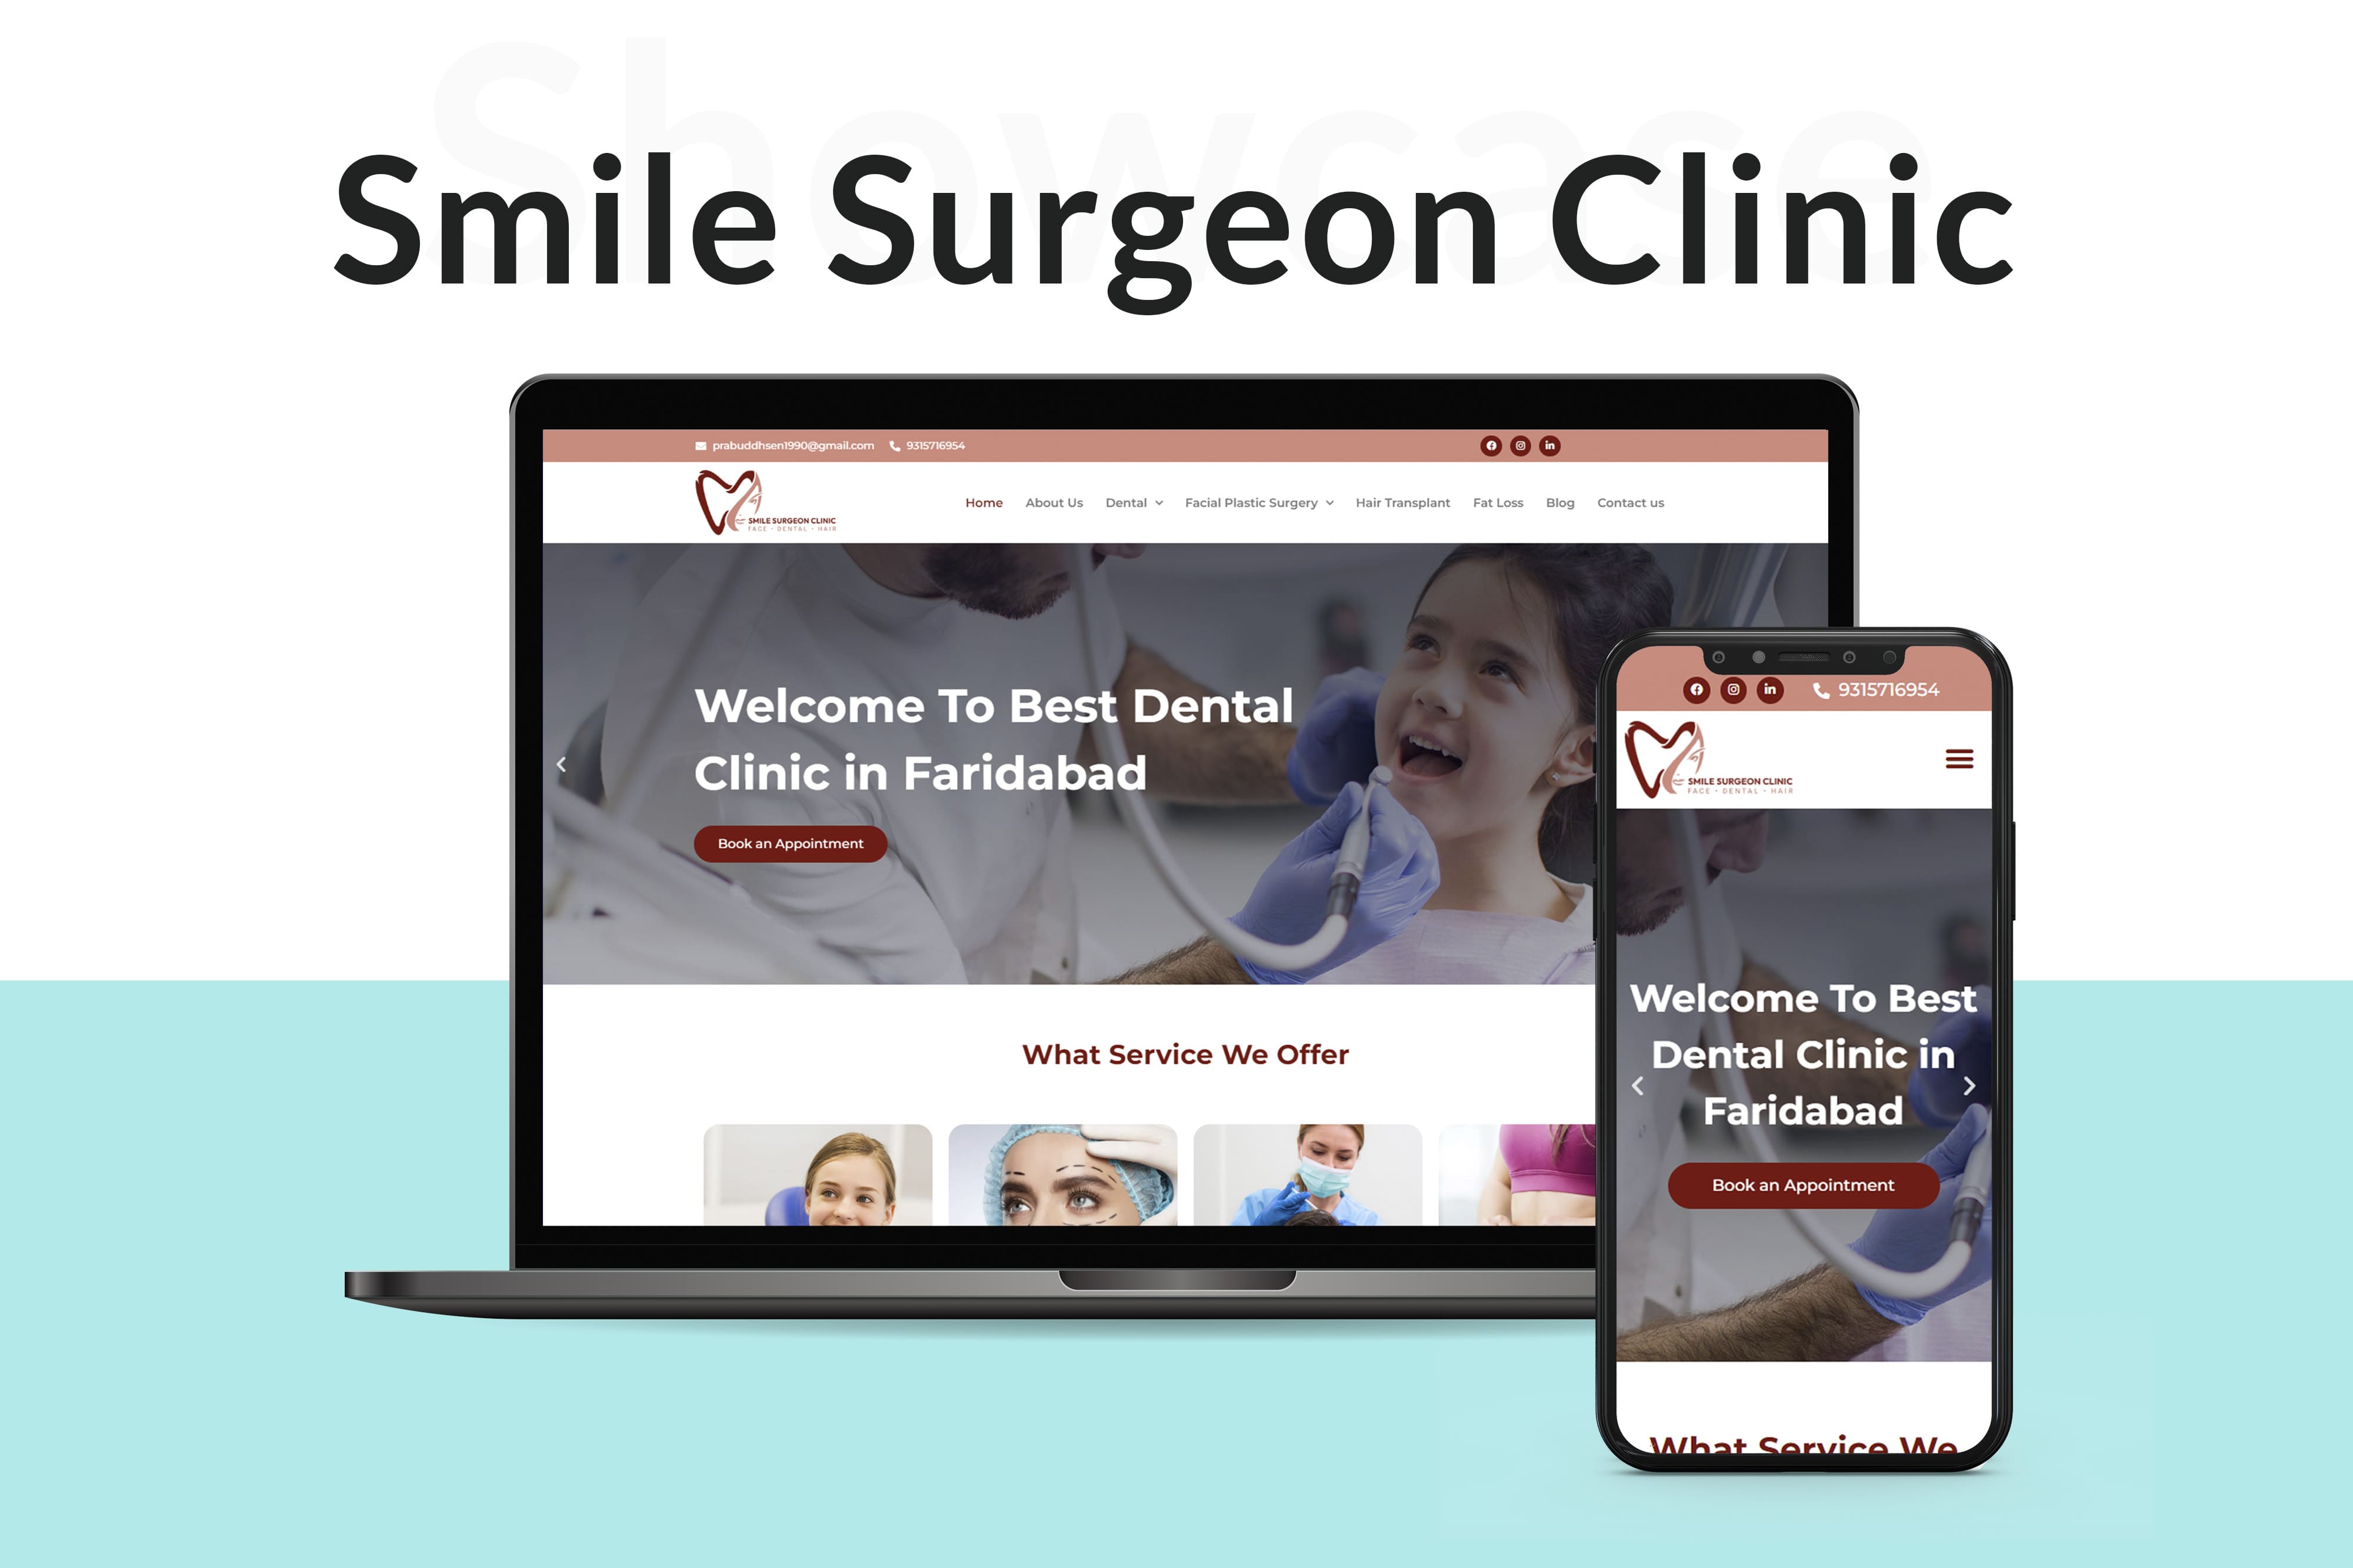 smilesurgeonclinic website